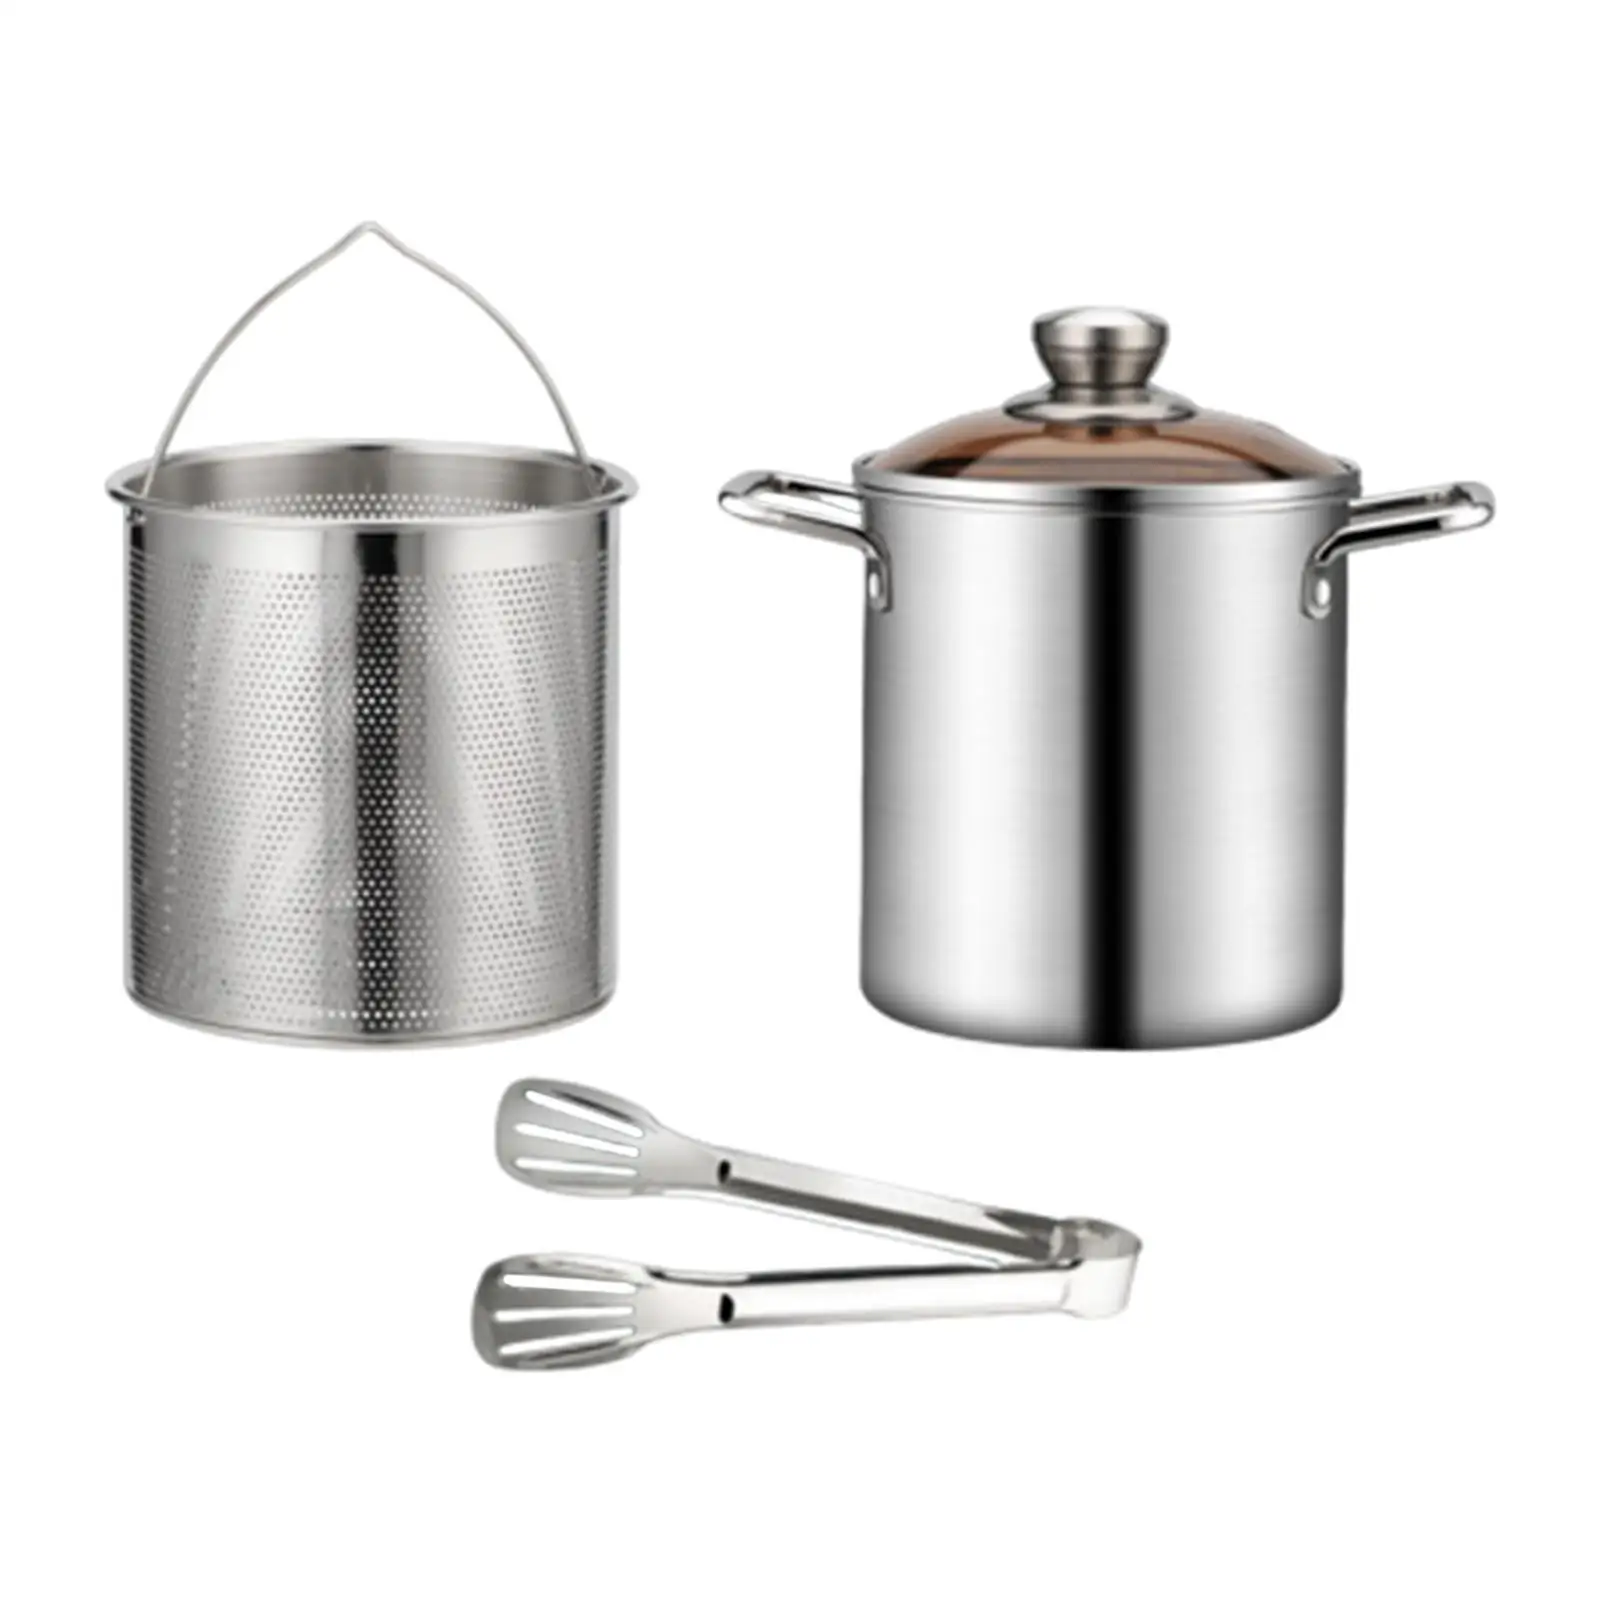 https://ae01.alicdn.com/kf/Sc3637757d9a24f0b9022db0f6288e954j/Stainless-Steel-Stockpot-with-Strainer-Deep-Fryer-Cookware-Nonstick-Double-Handle-Heavy-Duty-Cooking-Pot-Seafood.jpg